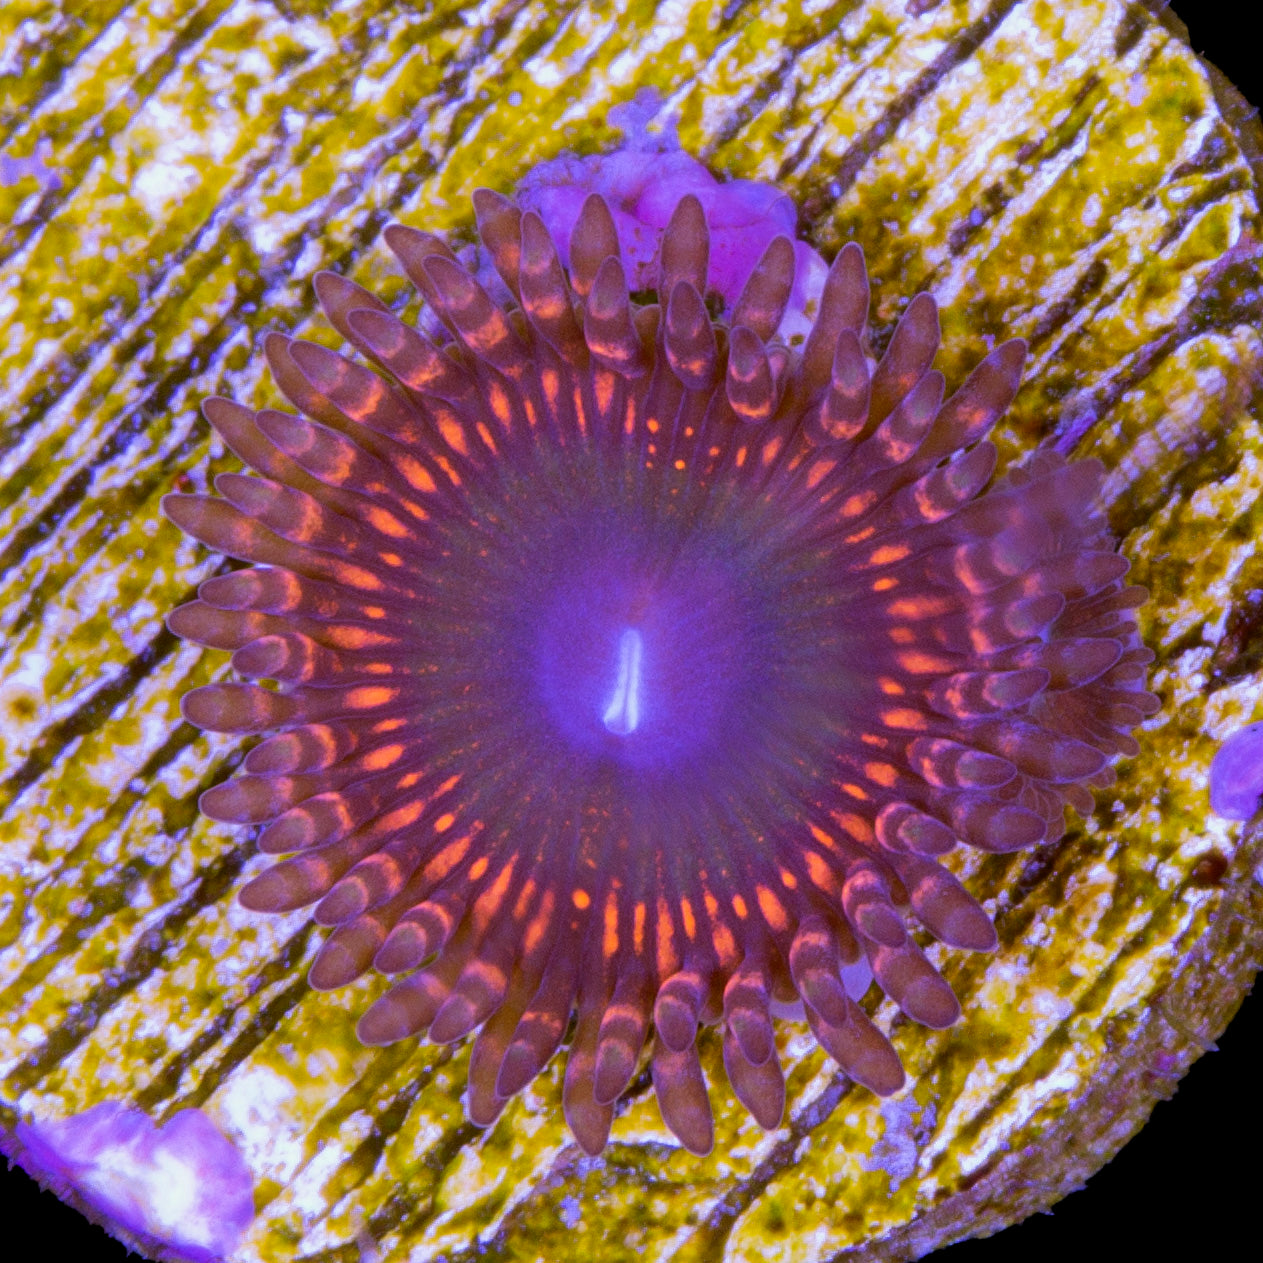 Vivid's Elden Ring Zoanthid Coral